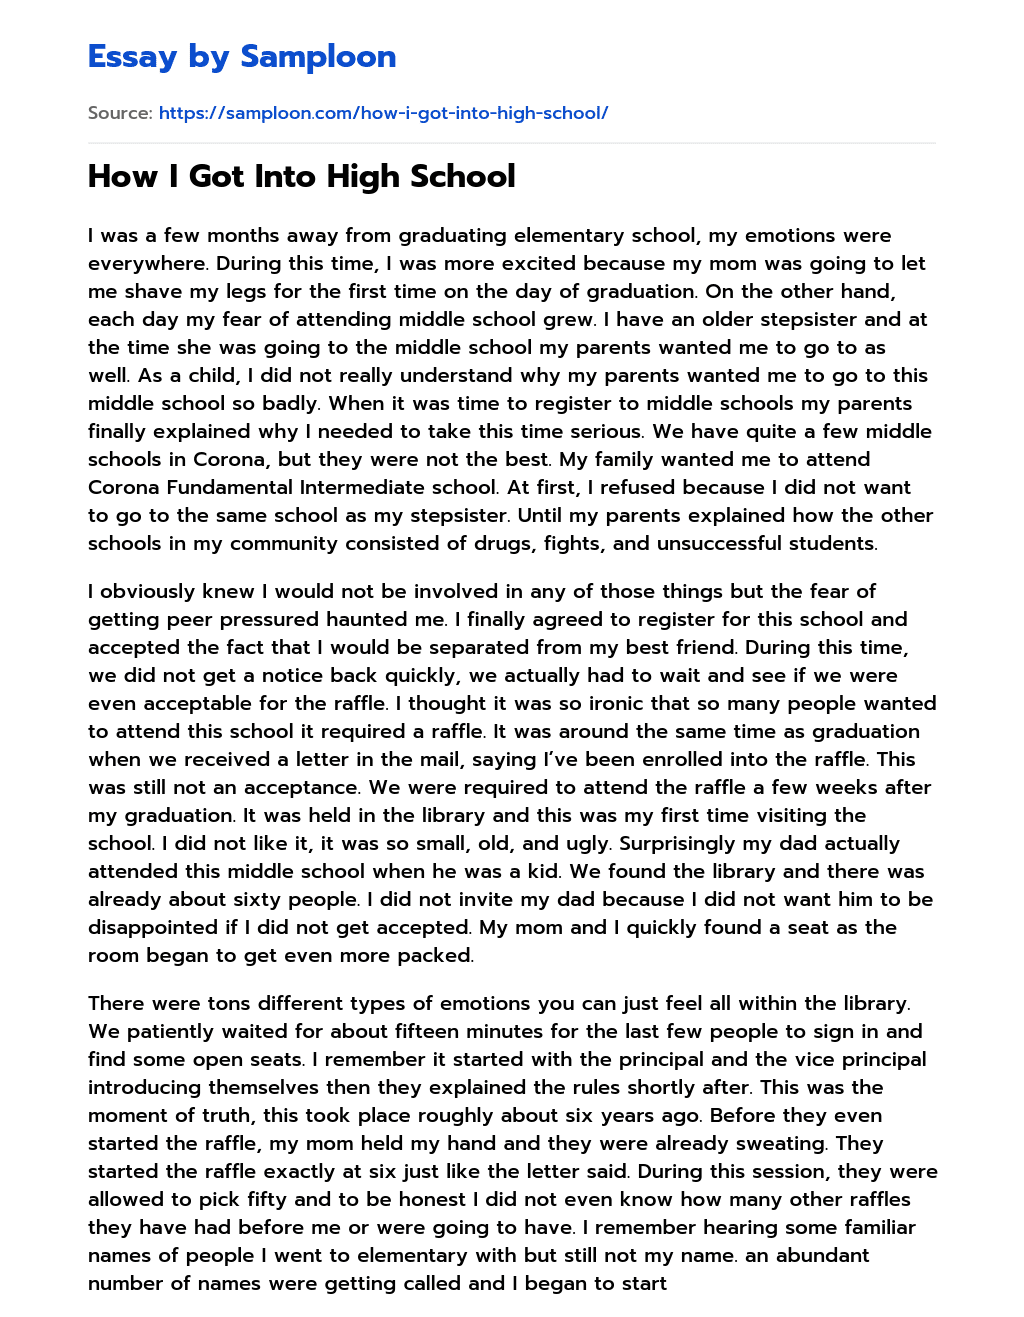 How I Got Into High School essay